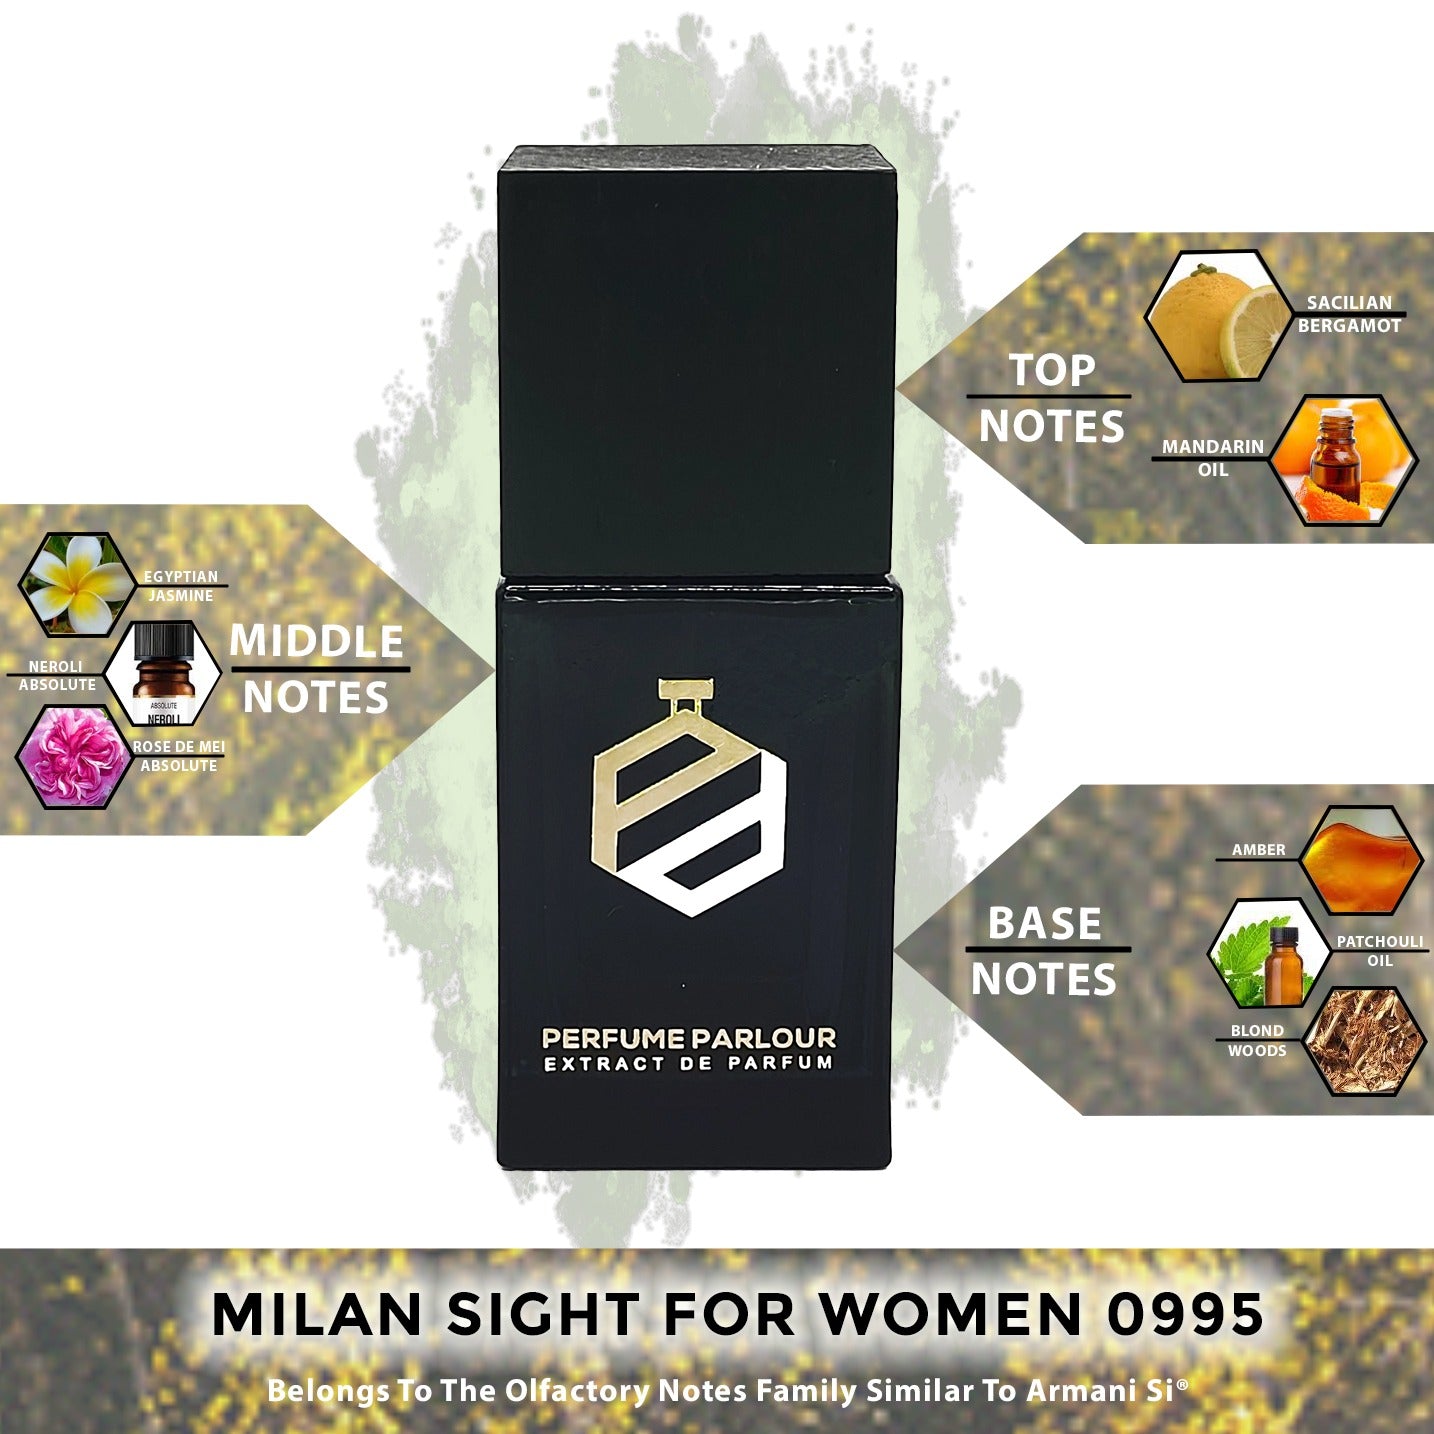 Milan Sight For Women 0995 - Perfume Parlour